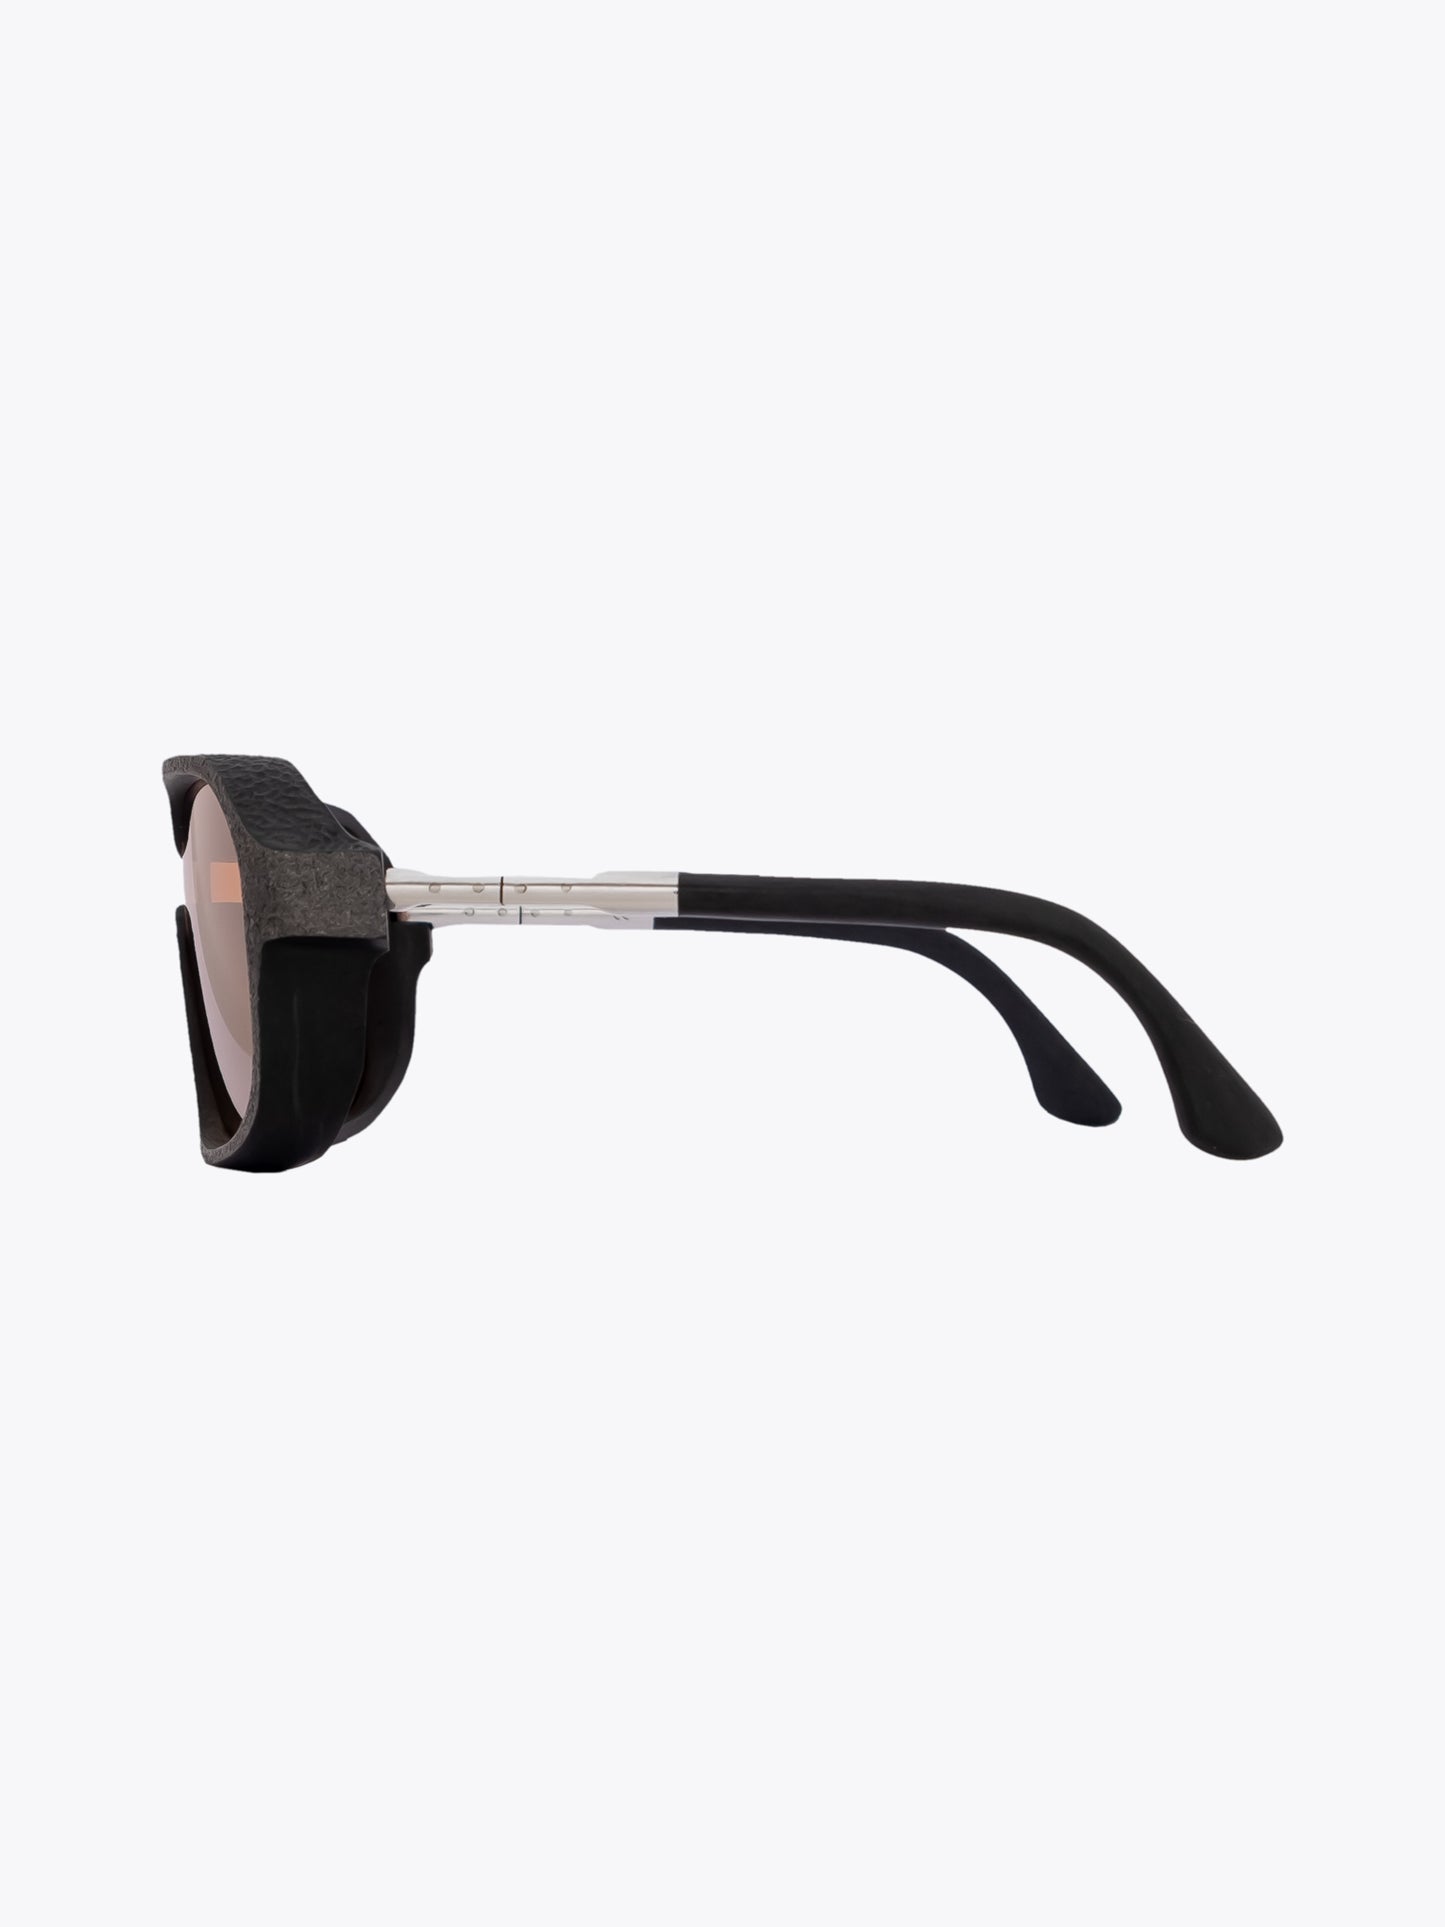 IMPURI Super Recycled Carbon Sunglasses Graphite - APODEP.com